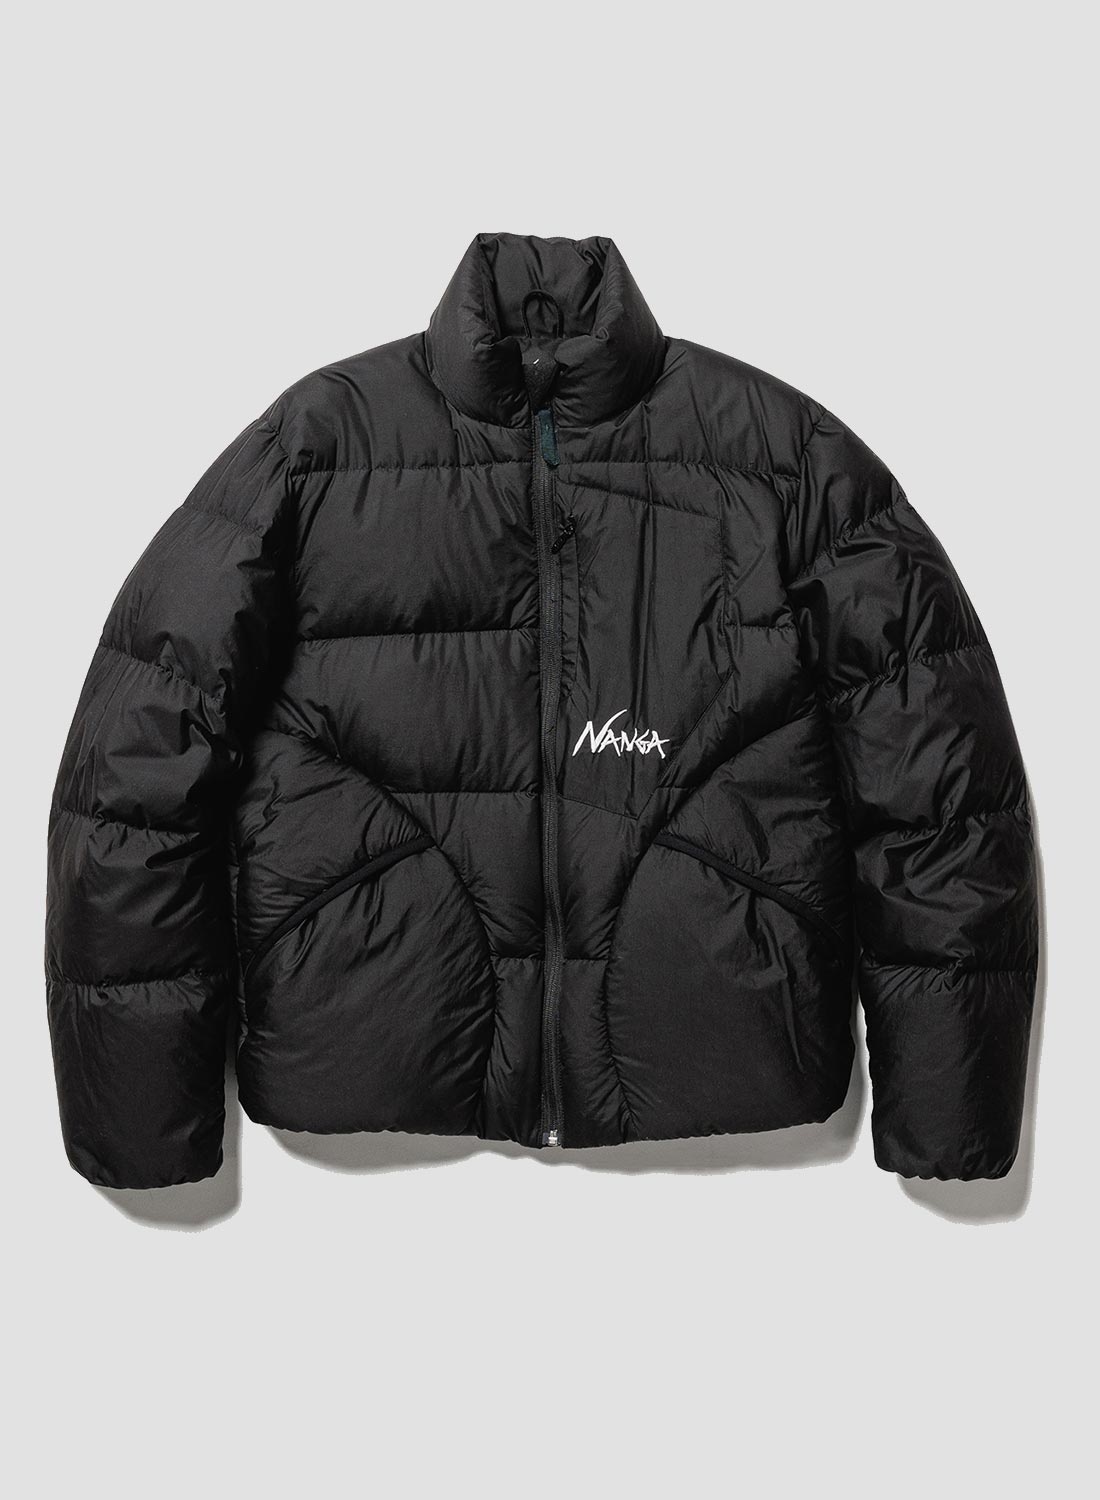 Nanga Mazeno Ridge Jacket in Black - 1